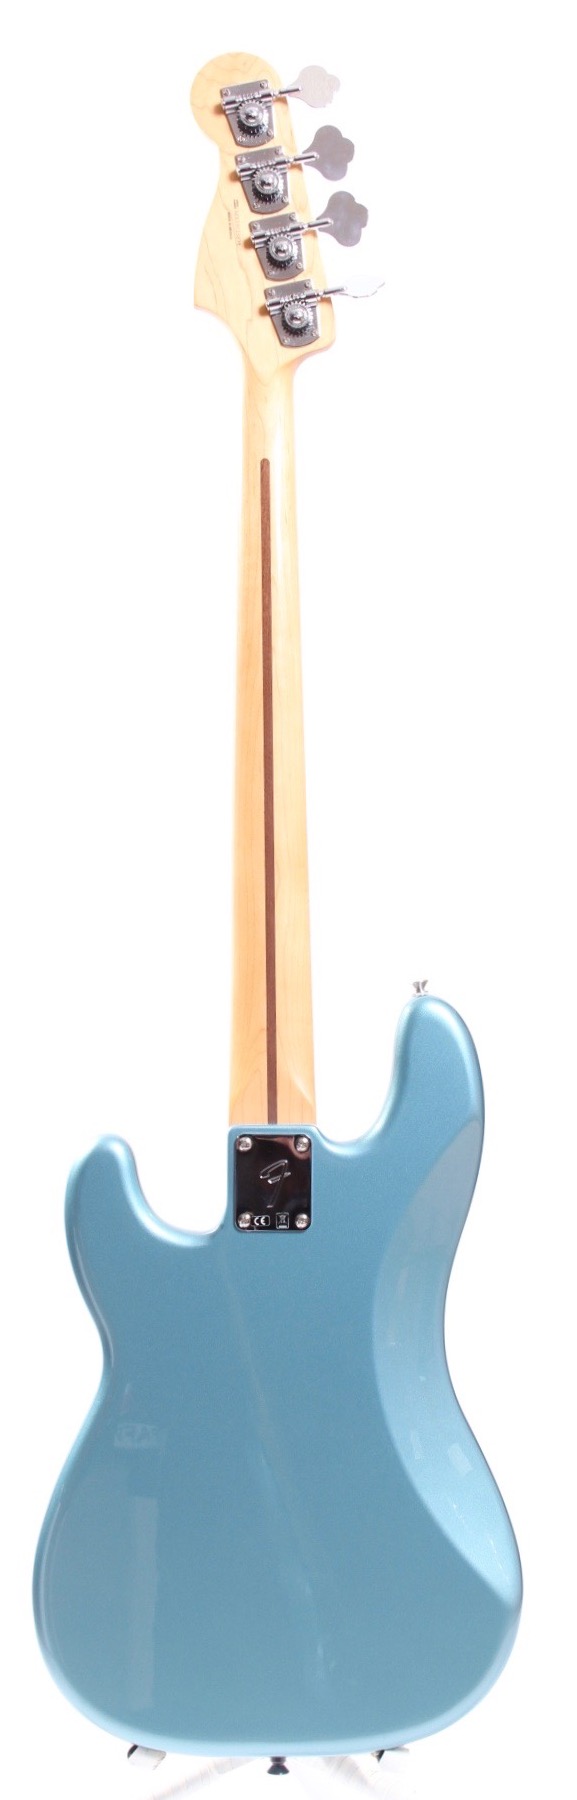 Fender Player Precision Bass 2019 Tidepool Blue Bass For Sale Yeahman's ...